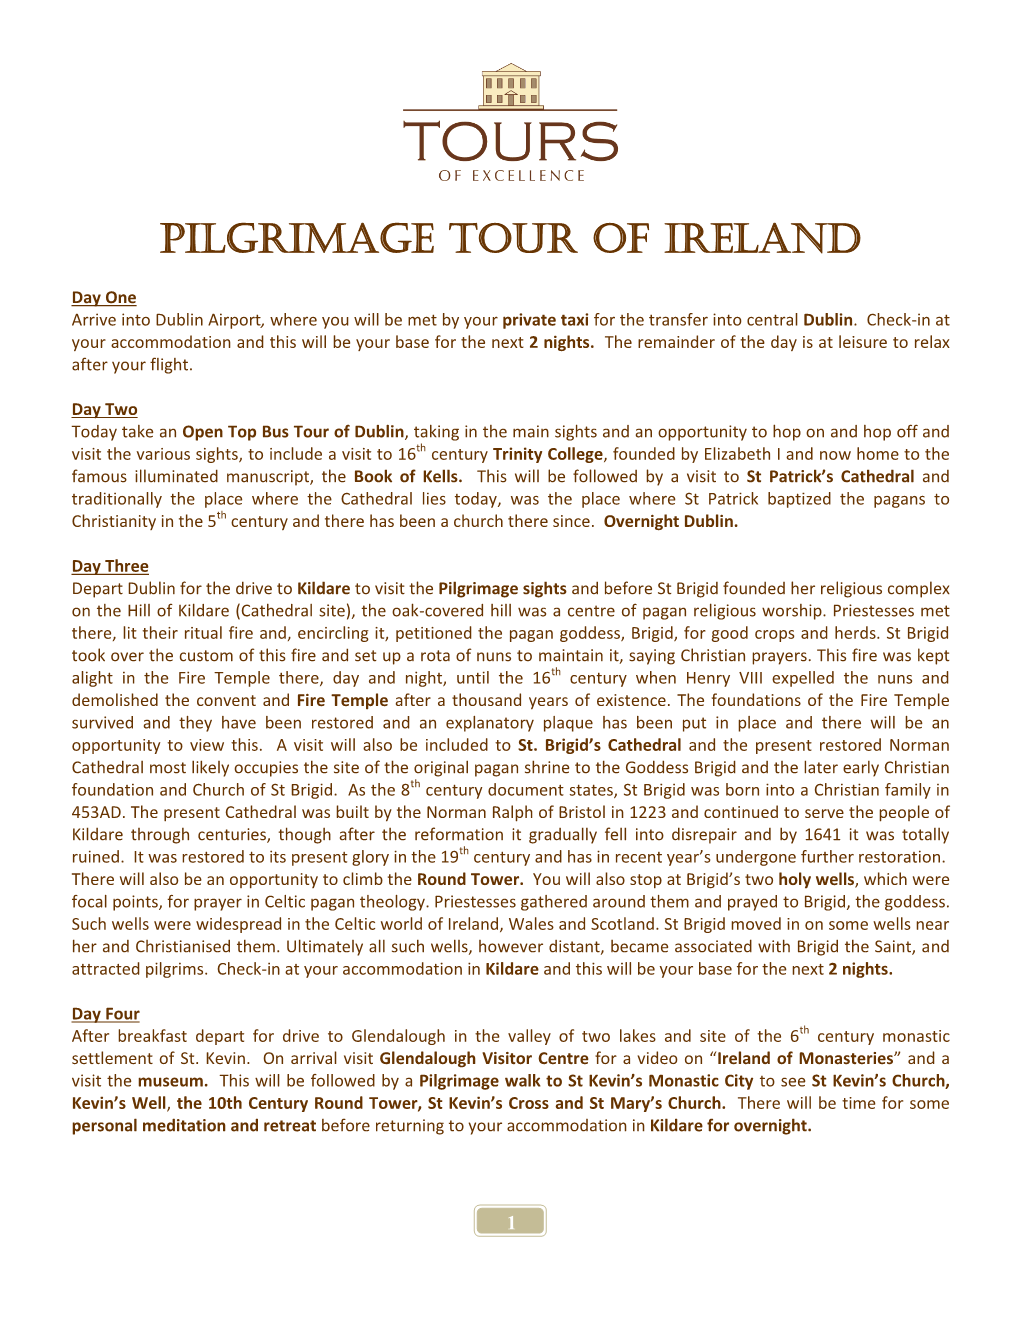 Irish Pilgrimage